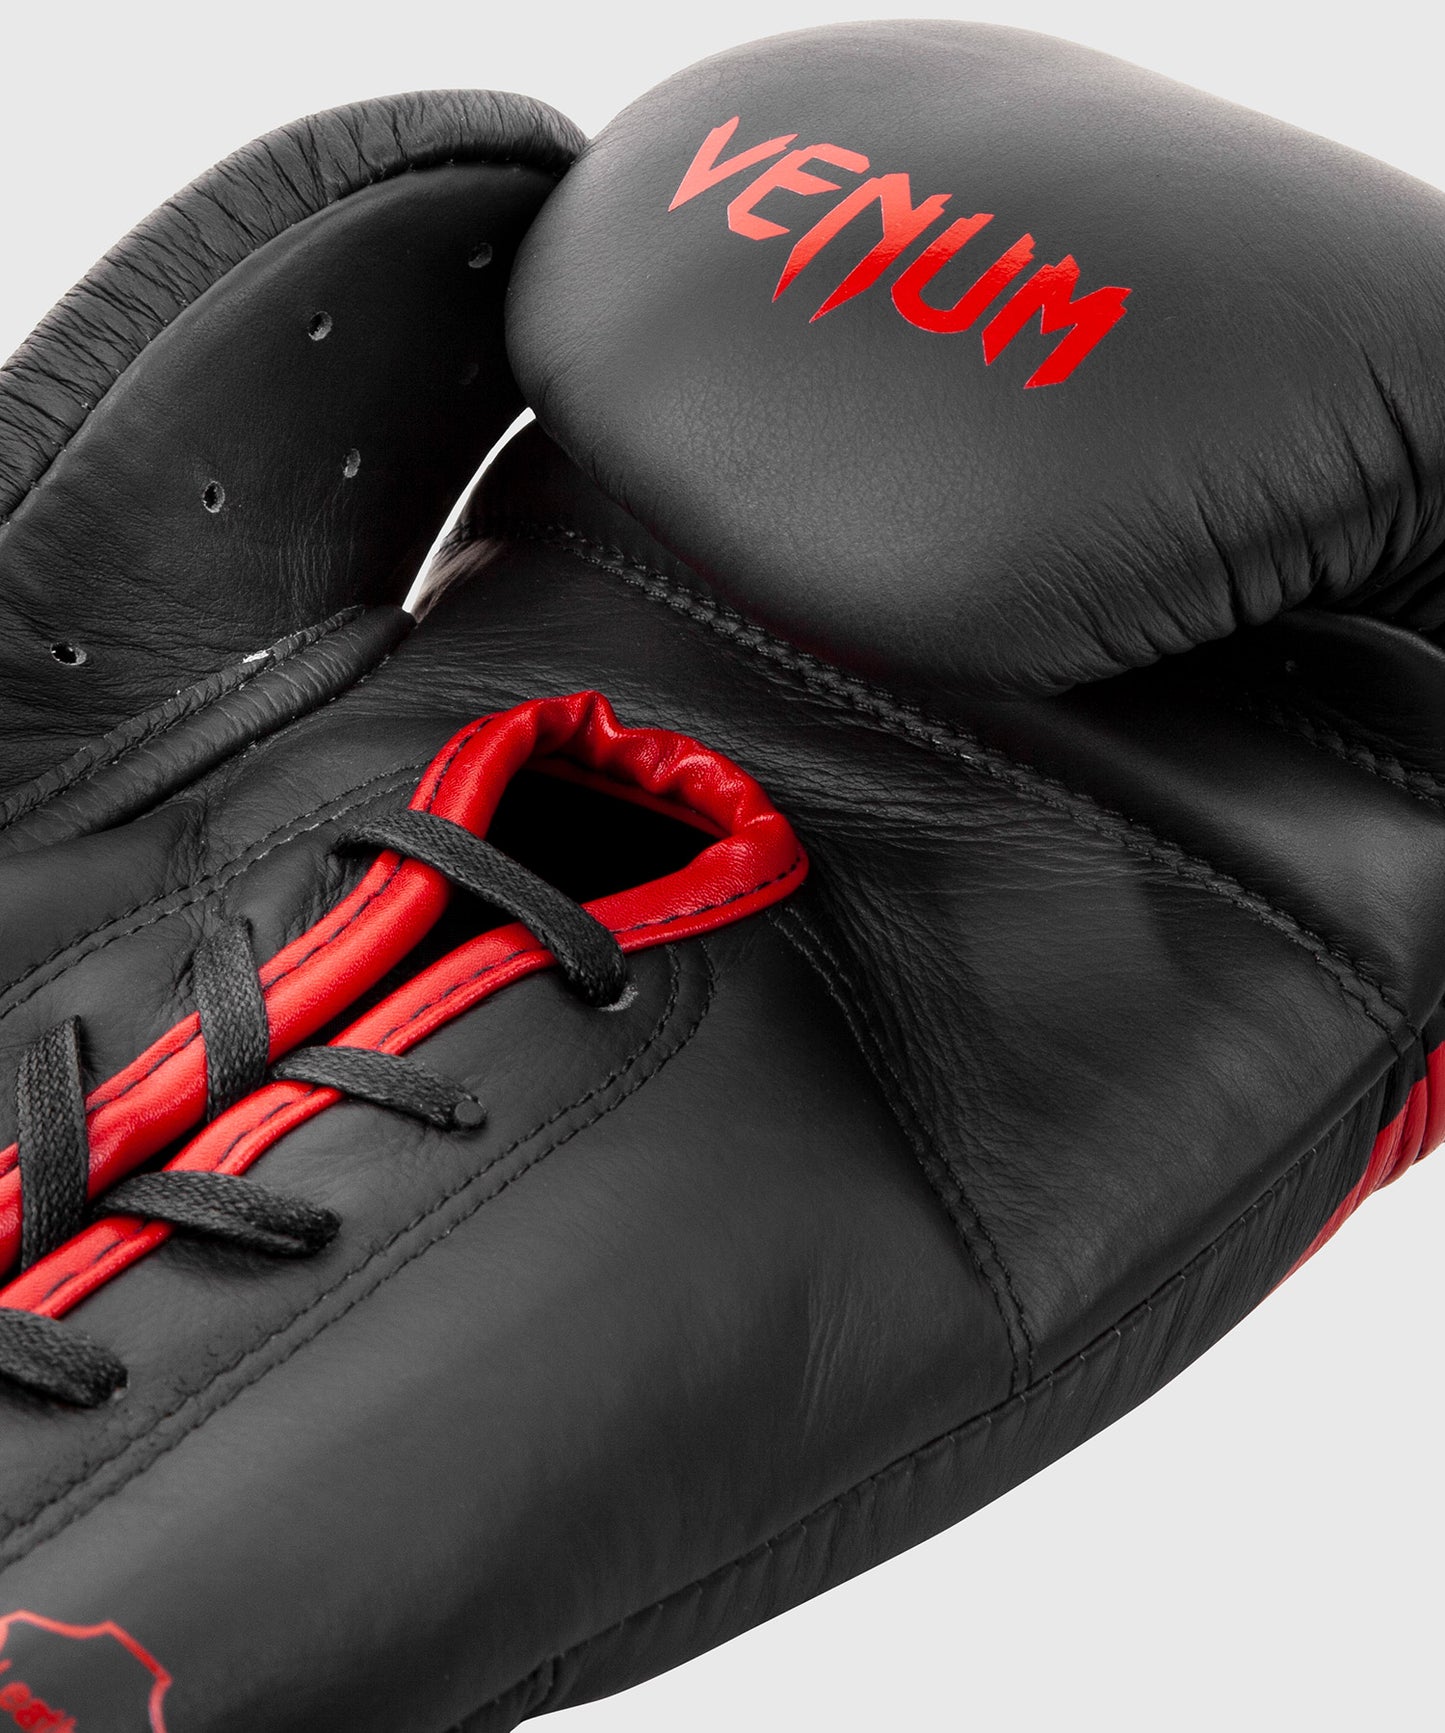 Guantes de Boxeo profesional Venum Giant 2.0  – cordones